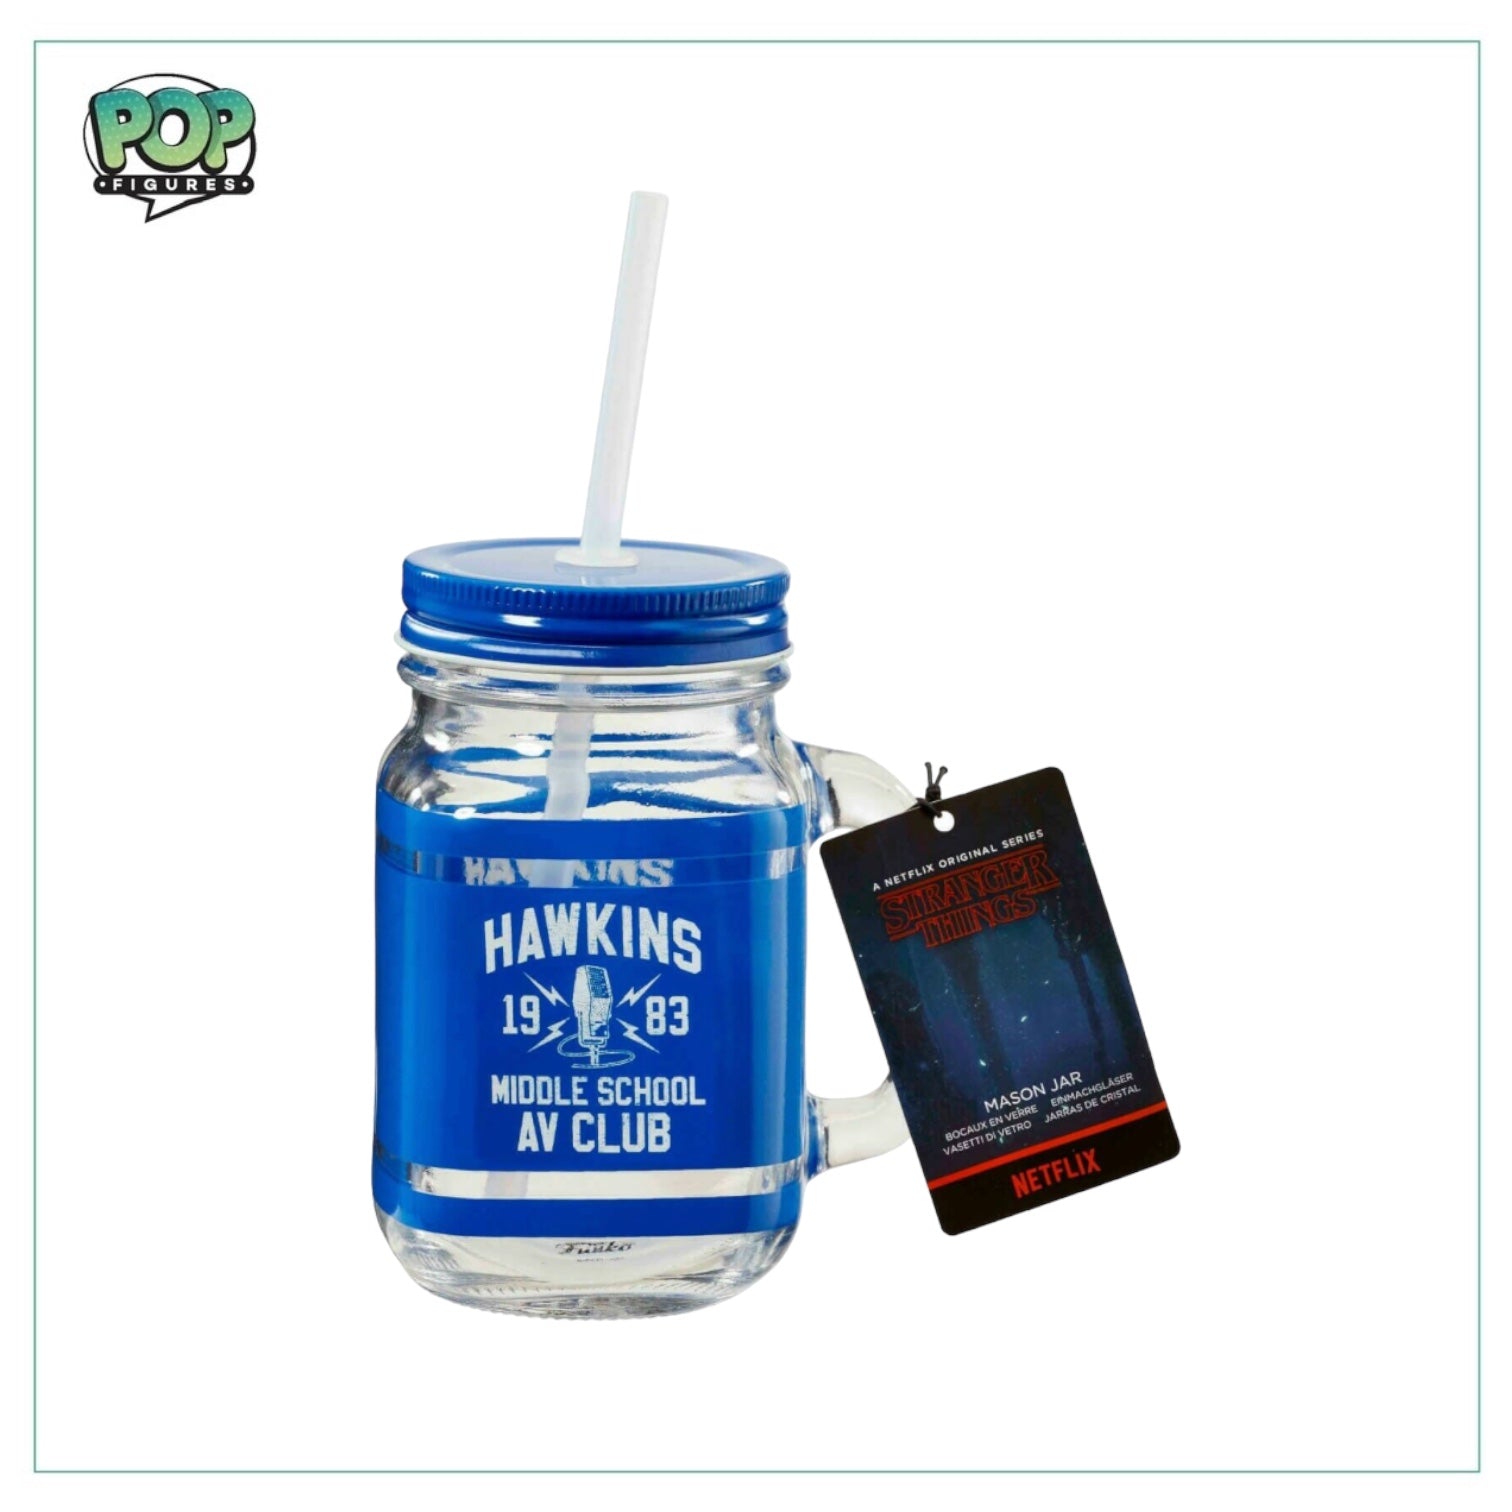 Hawkins Middle School Mason Jar with Straw - Stranger Things